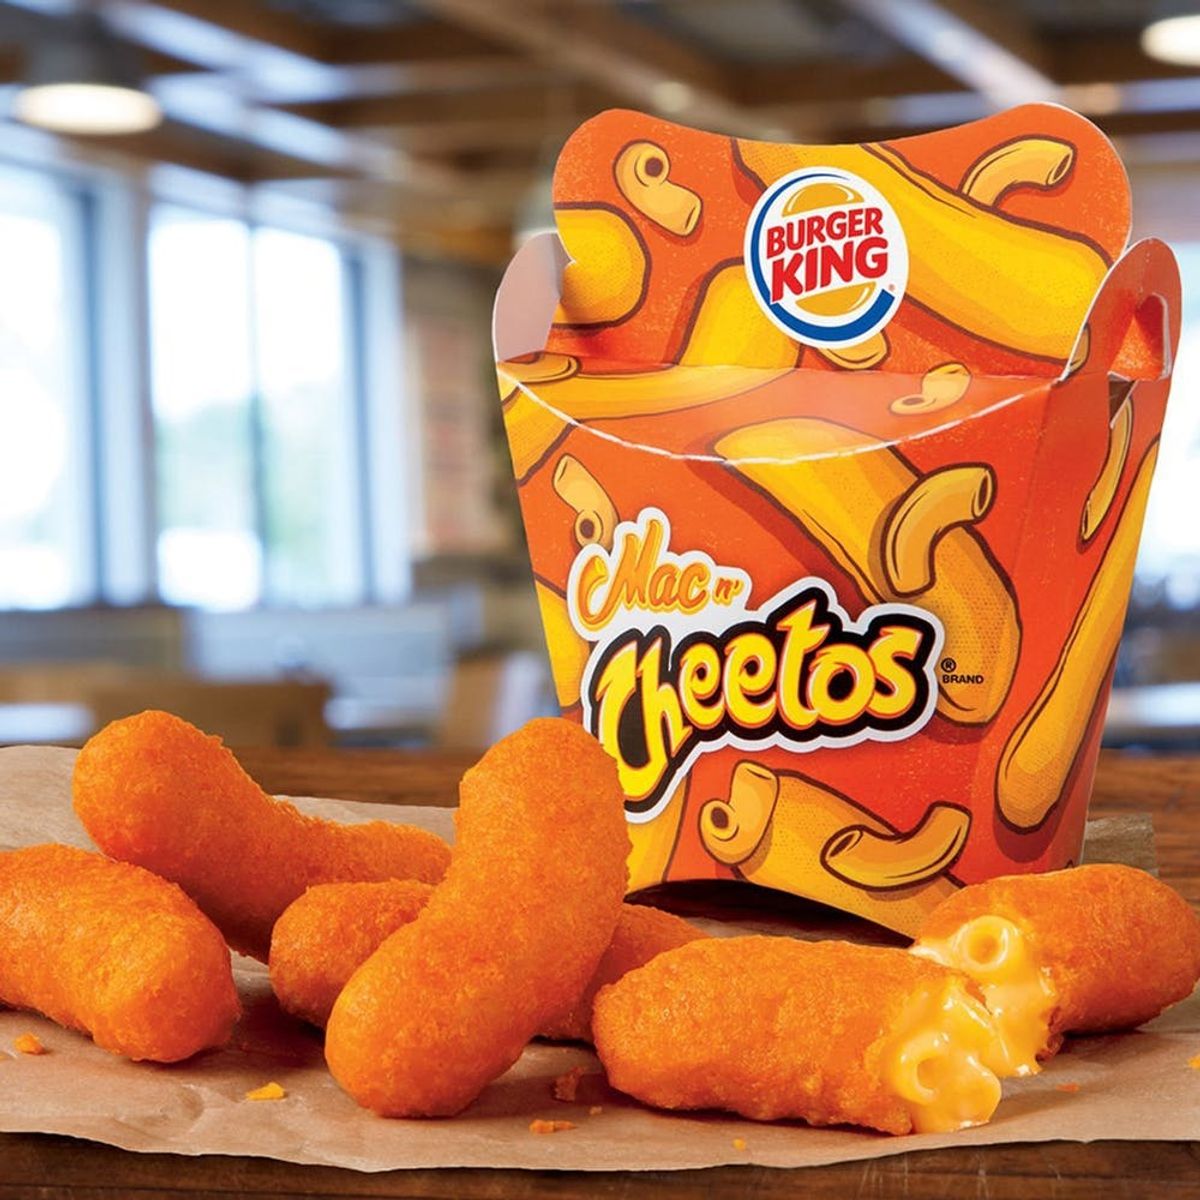 Introducing the Ultimate Junk Food Hybrid: Burger King’s New Mac n’ Cheetos